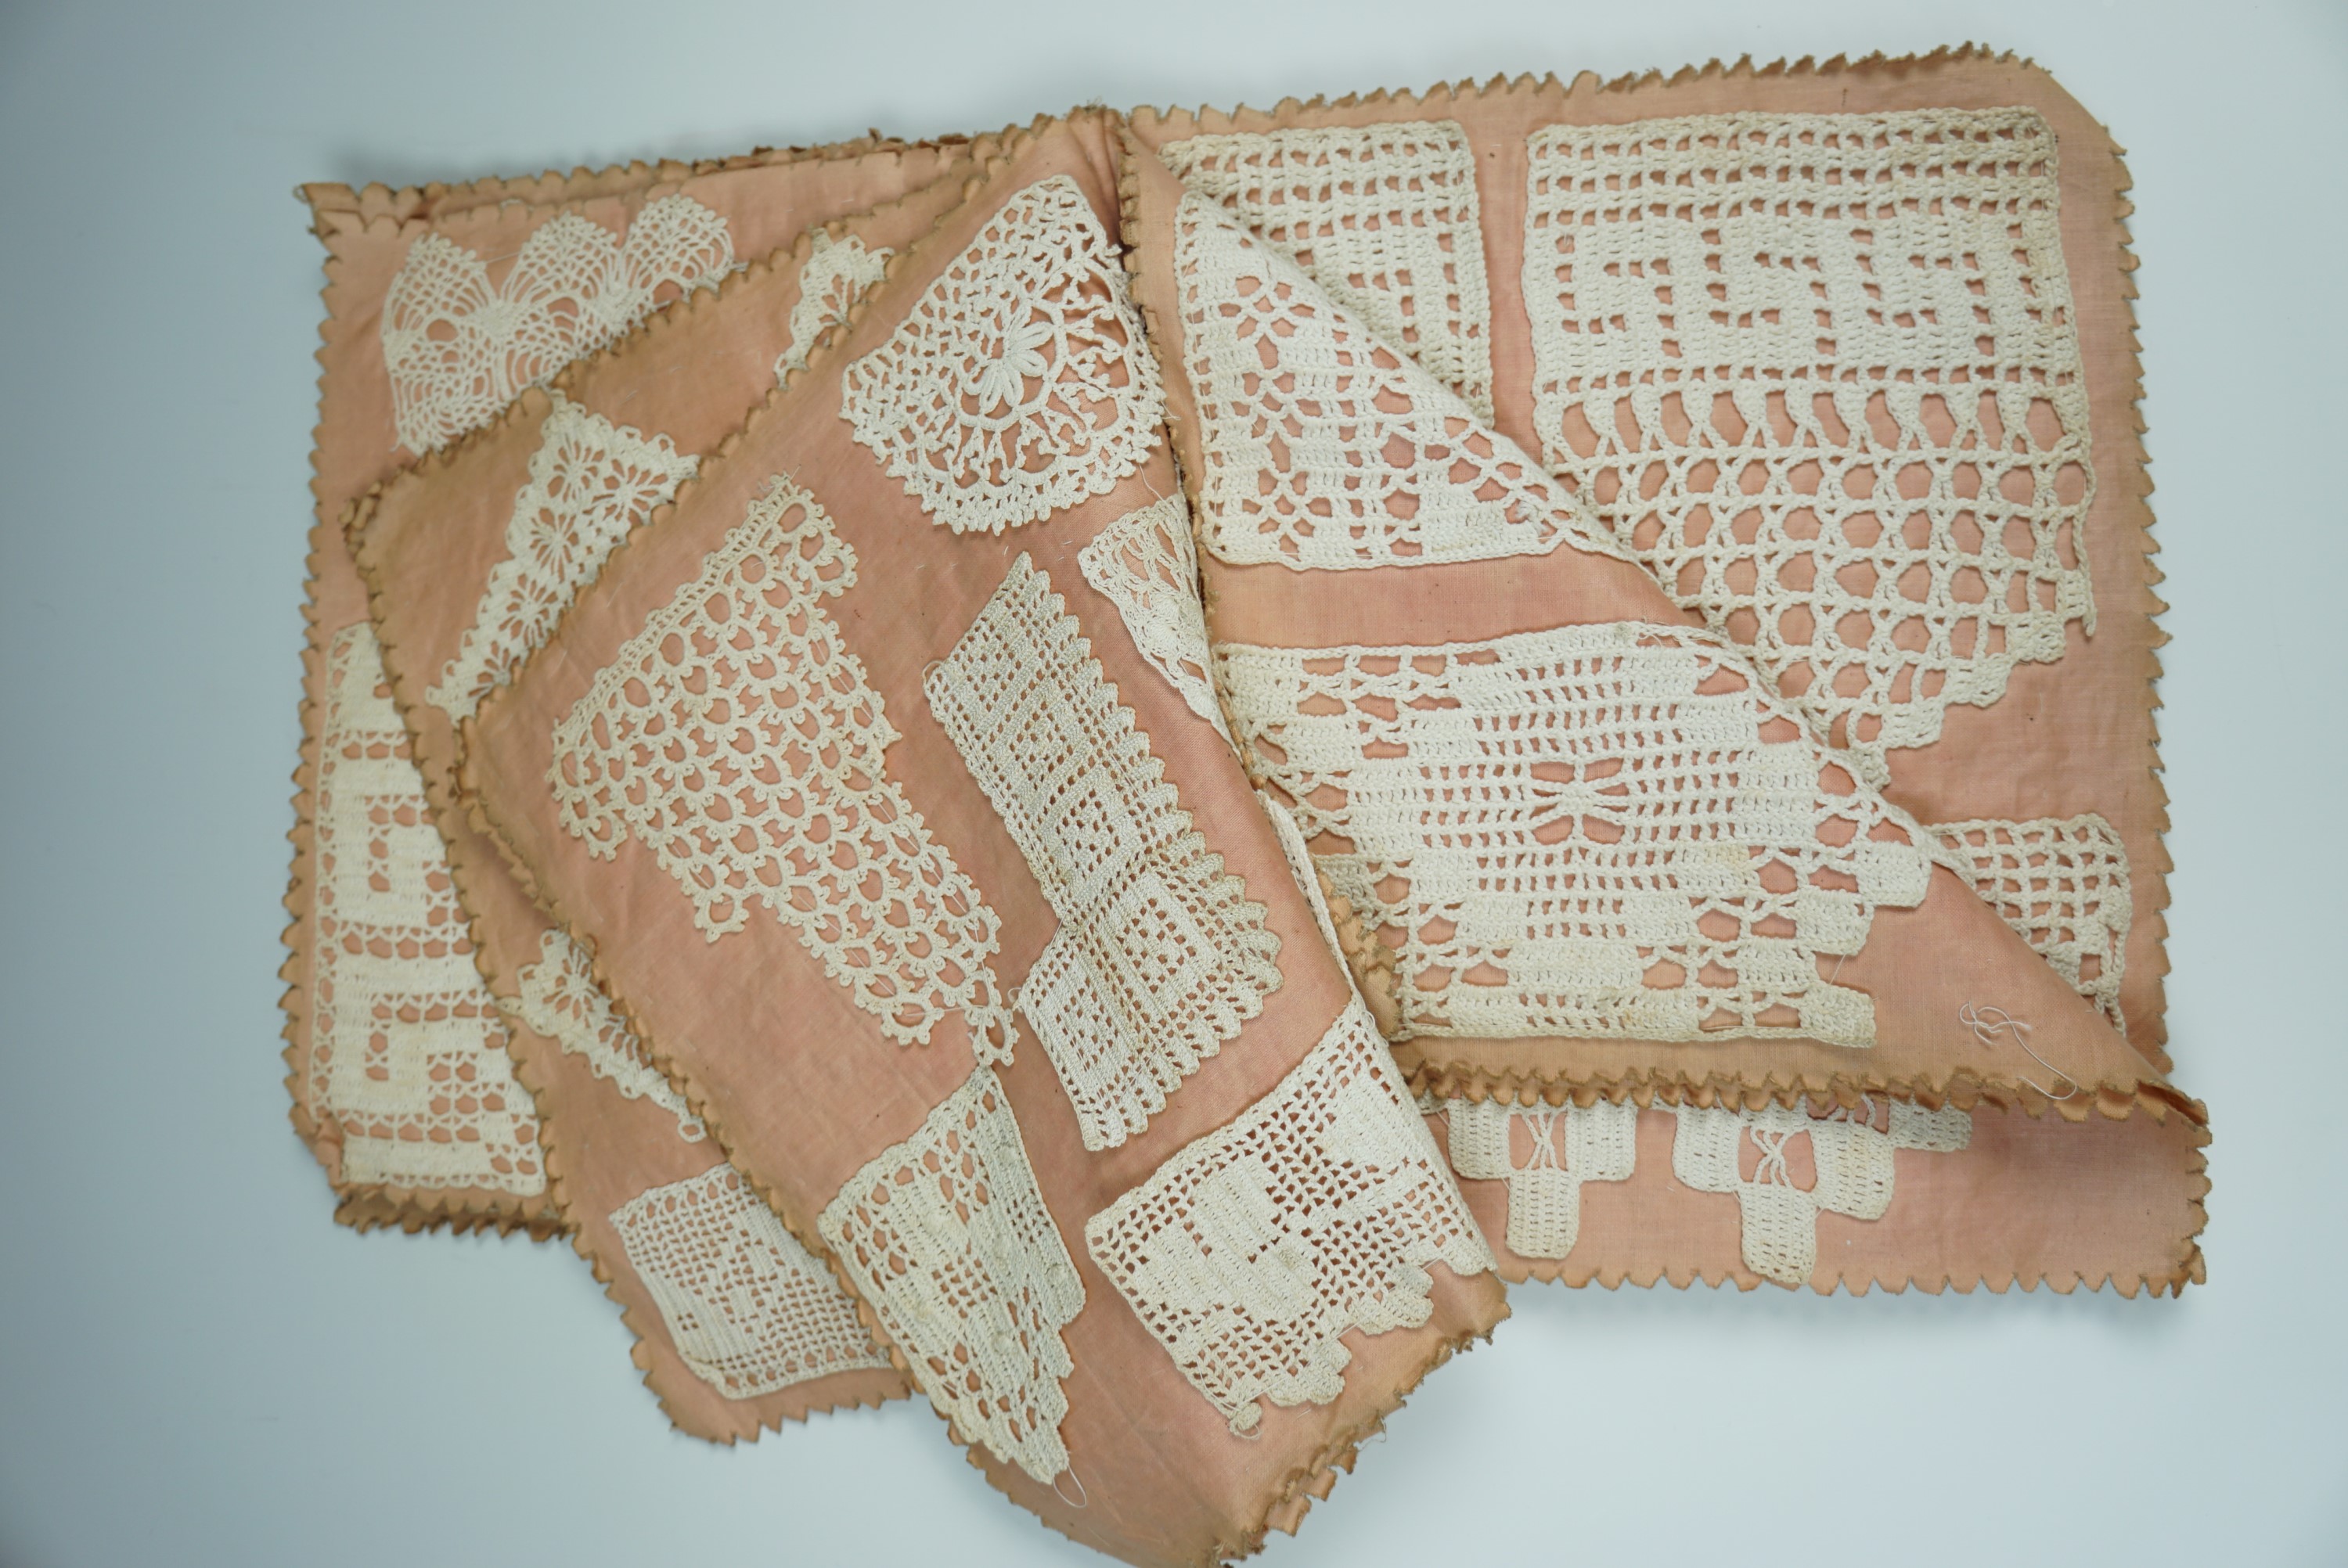 A Victorian fabric crochet work sample book